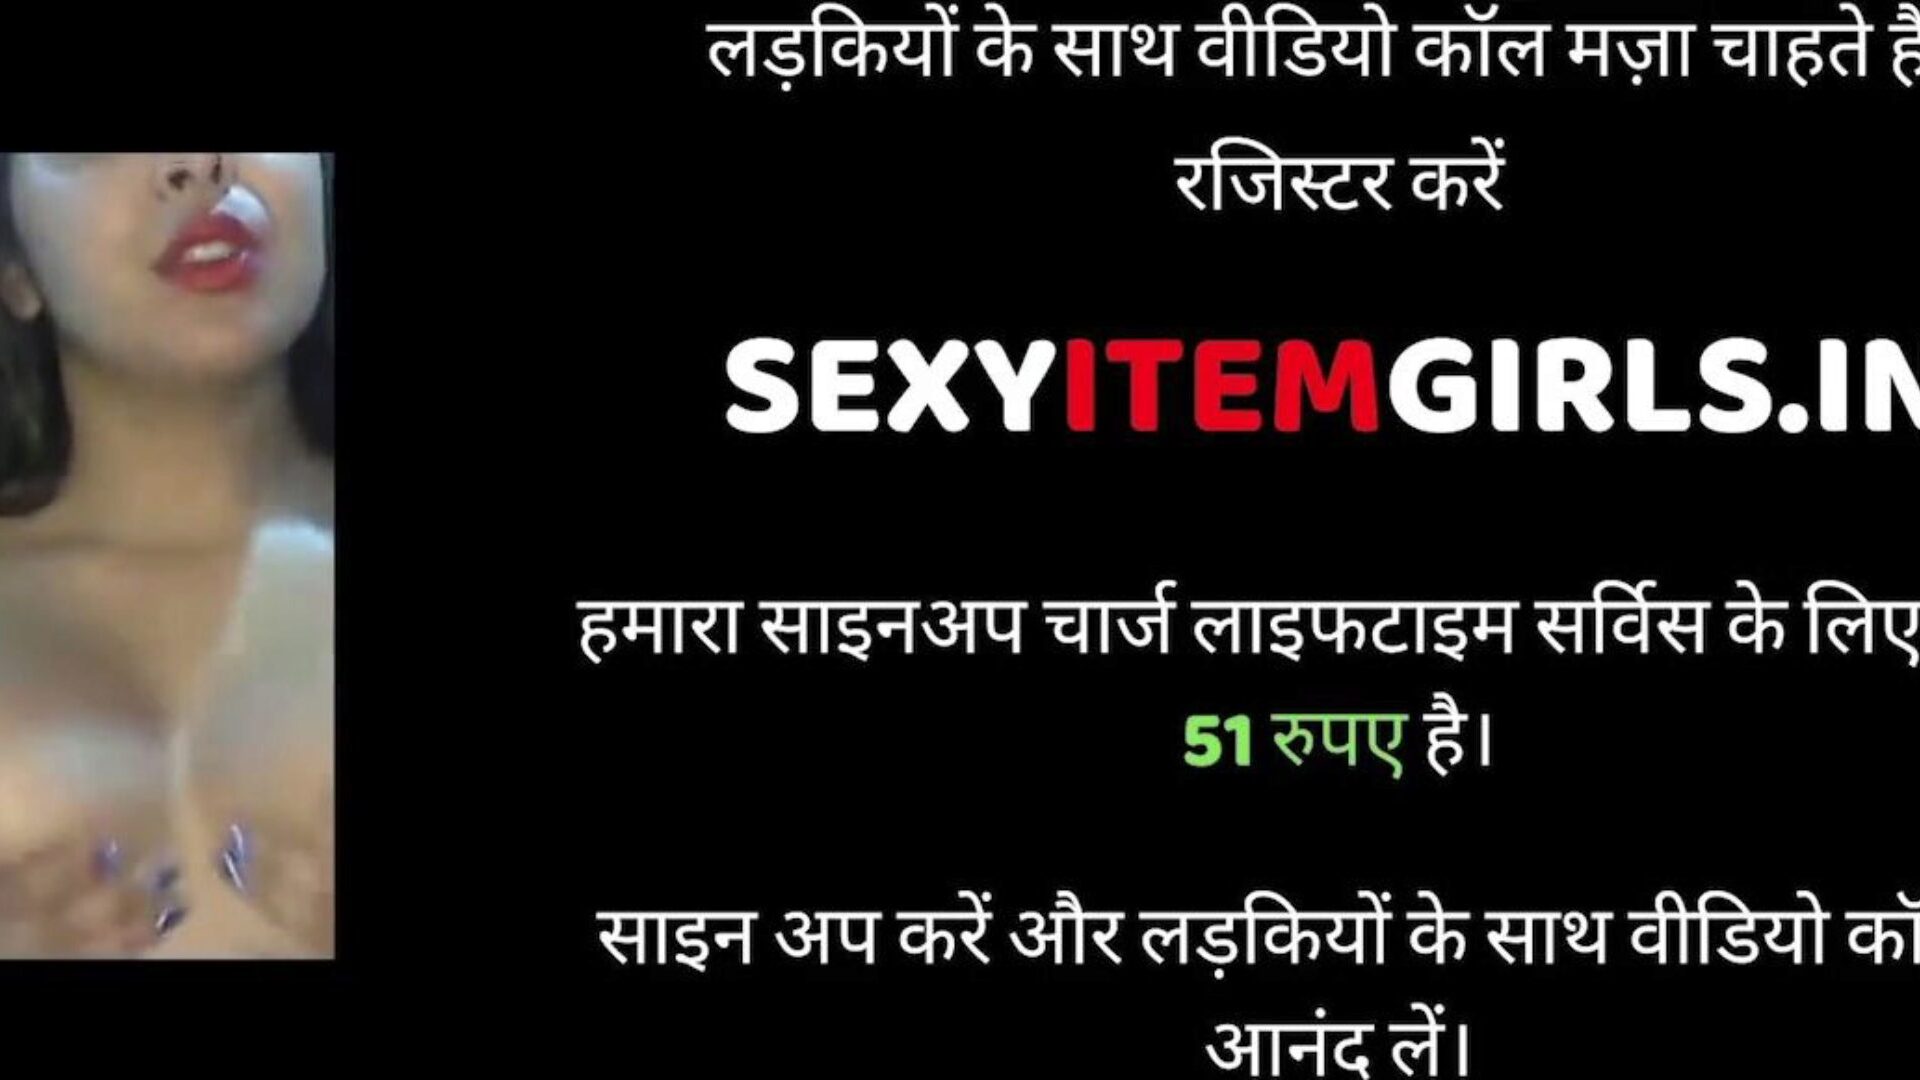 Xxx Hot Man And Girl Image Shayari - Porno Free Pics Free Videos Xxx - Tropic Tube